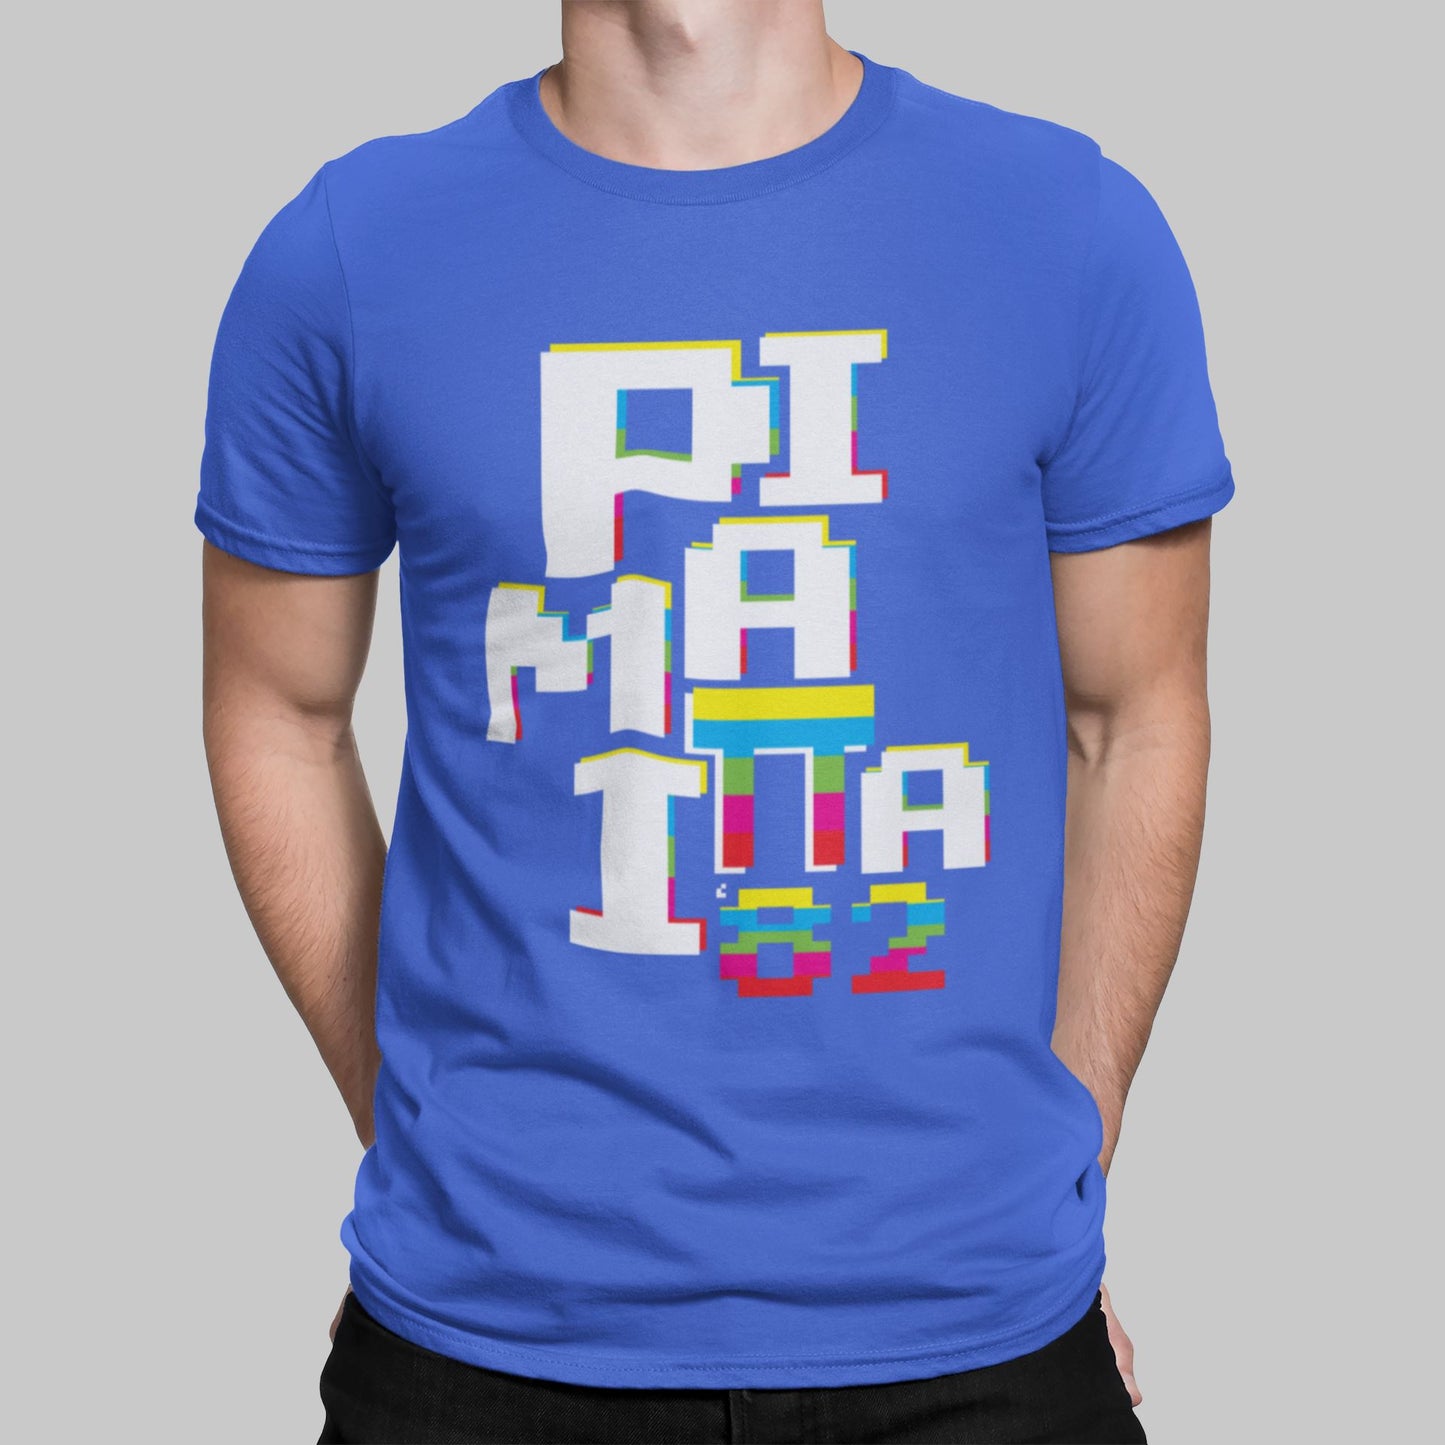 Pimania Retro Gaming T-Shirt T-Shirt Seven Squared Small 34-36" Royal Blue 